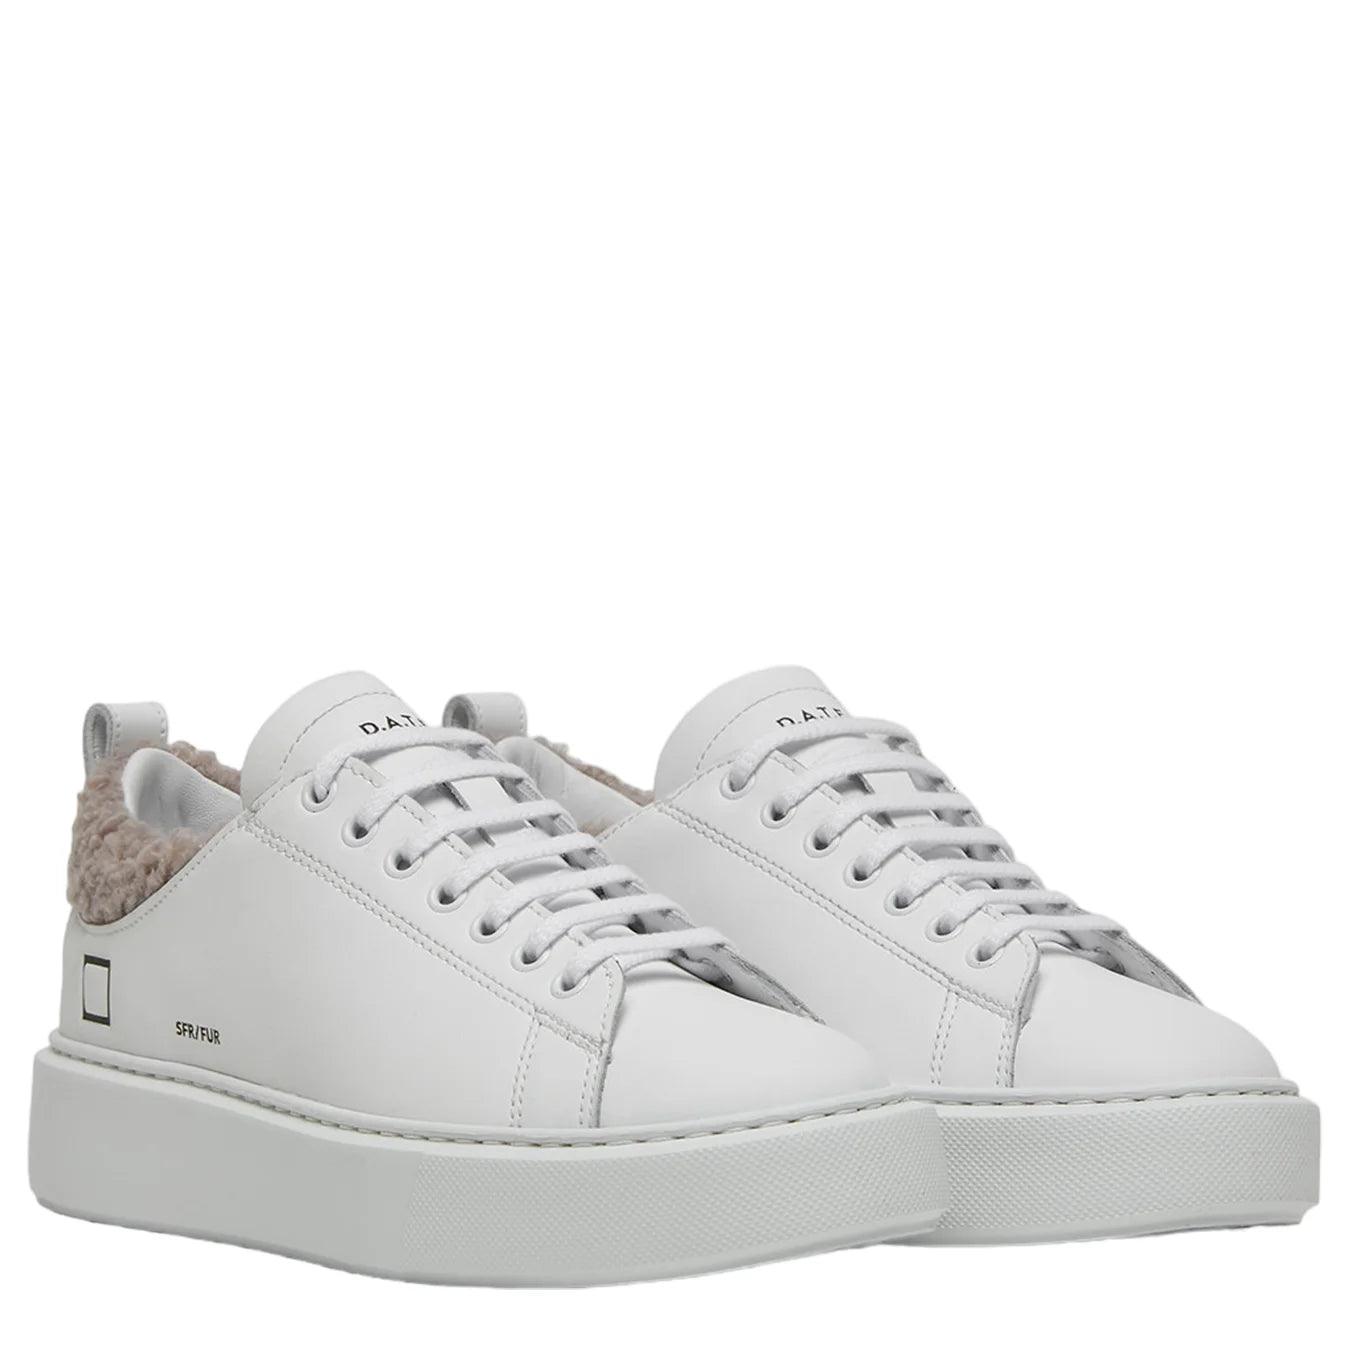 Date Sneakers Sfera Teddy, W391.sf.tc.hb, , Bianco/beige, Bassiniboutique.it, 2023 a/i